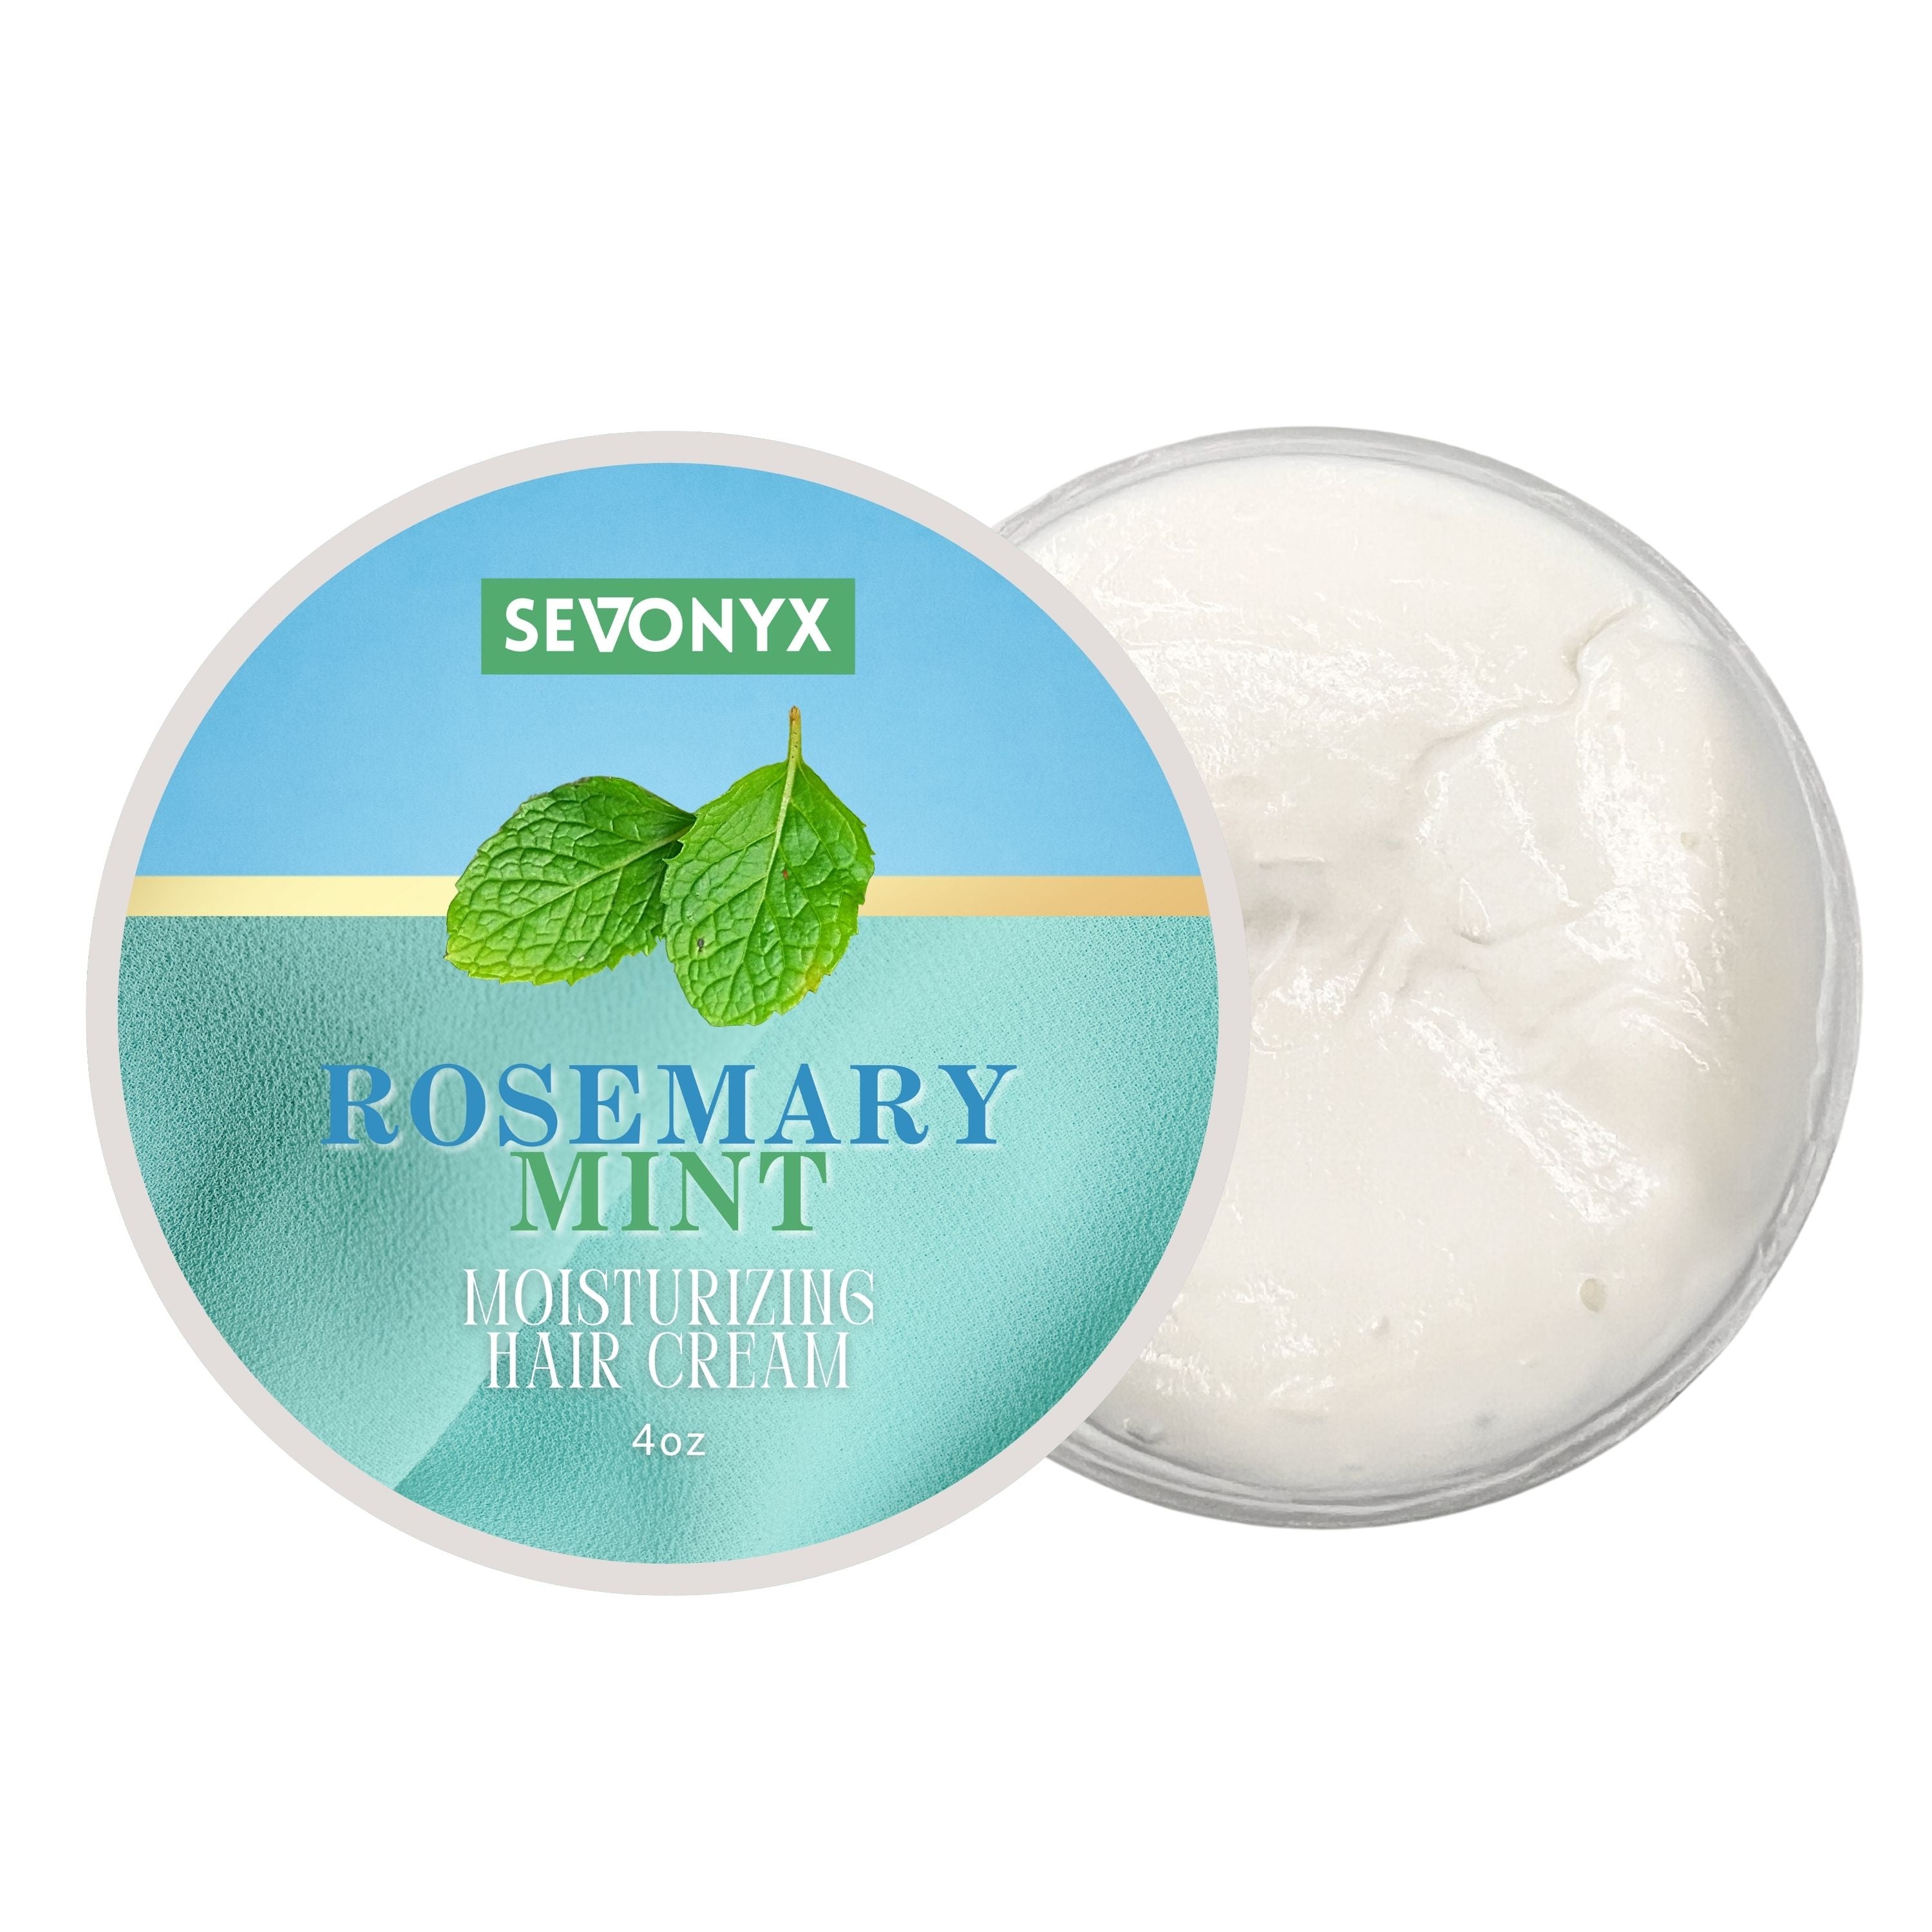 Rosemary Mint Hair Cream